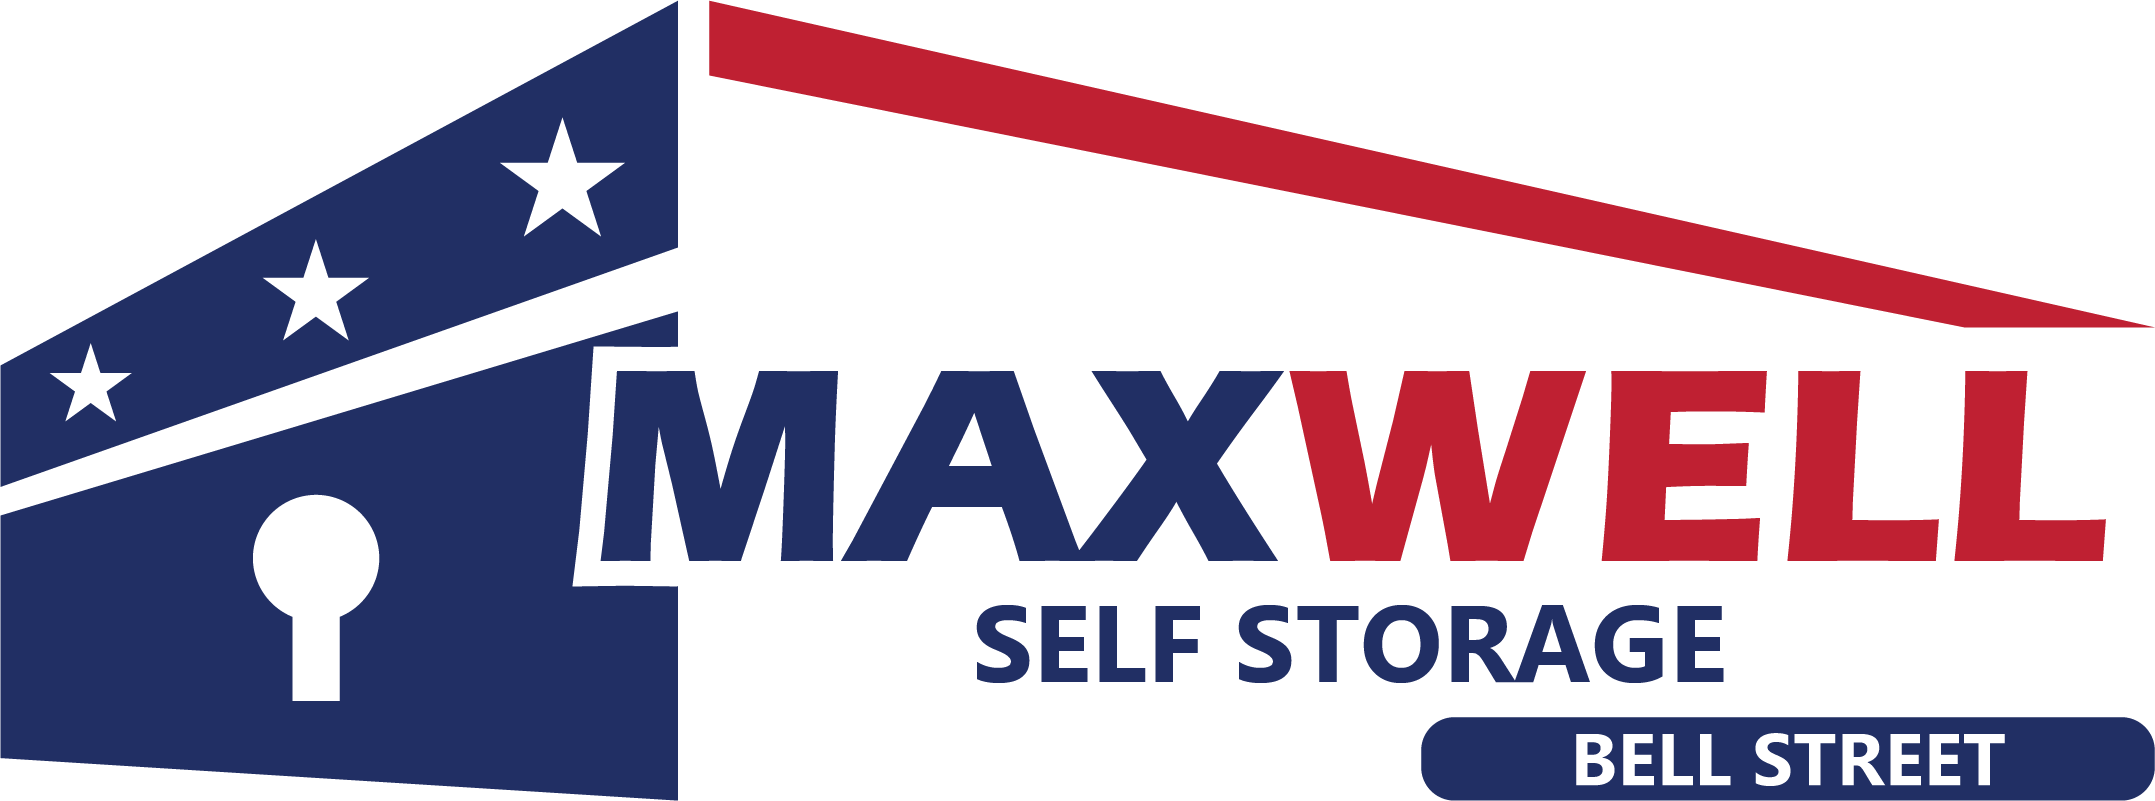 Maxwell Self Storage Bell Street Montgomery AL